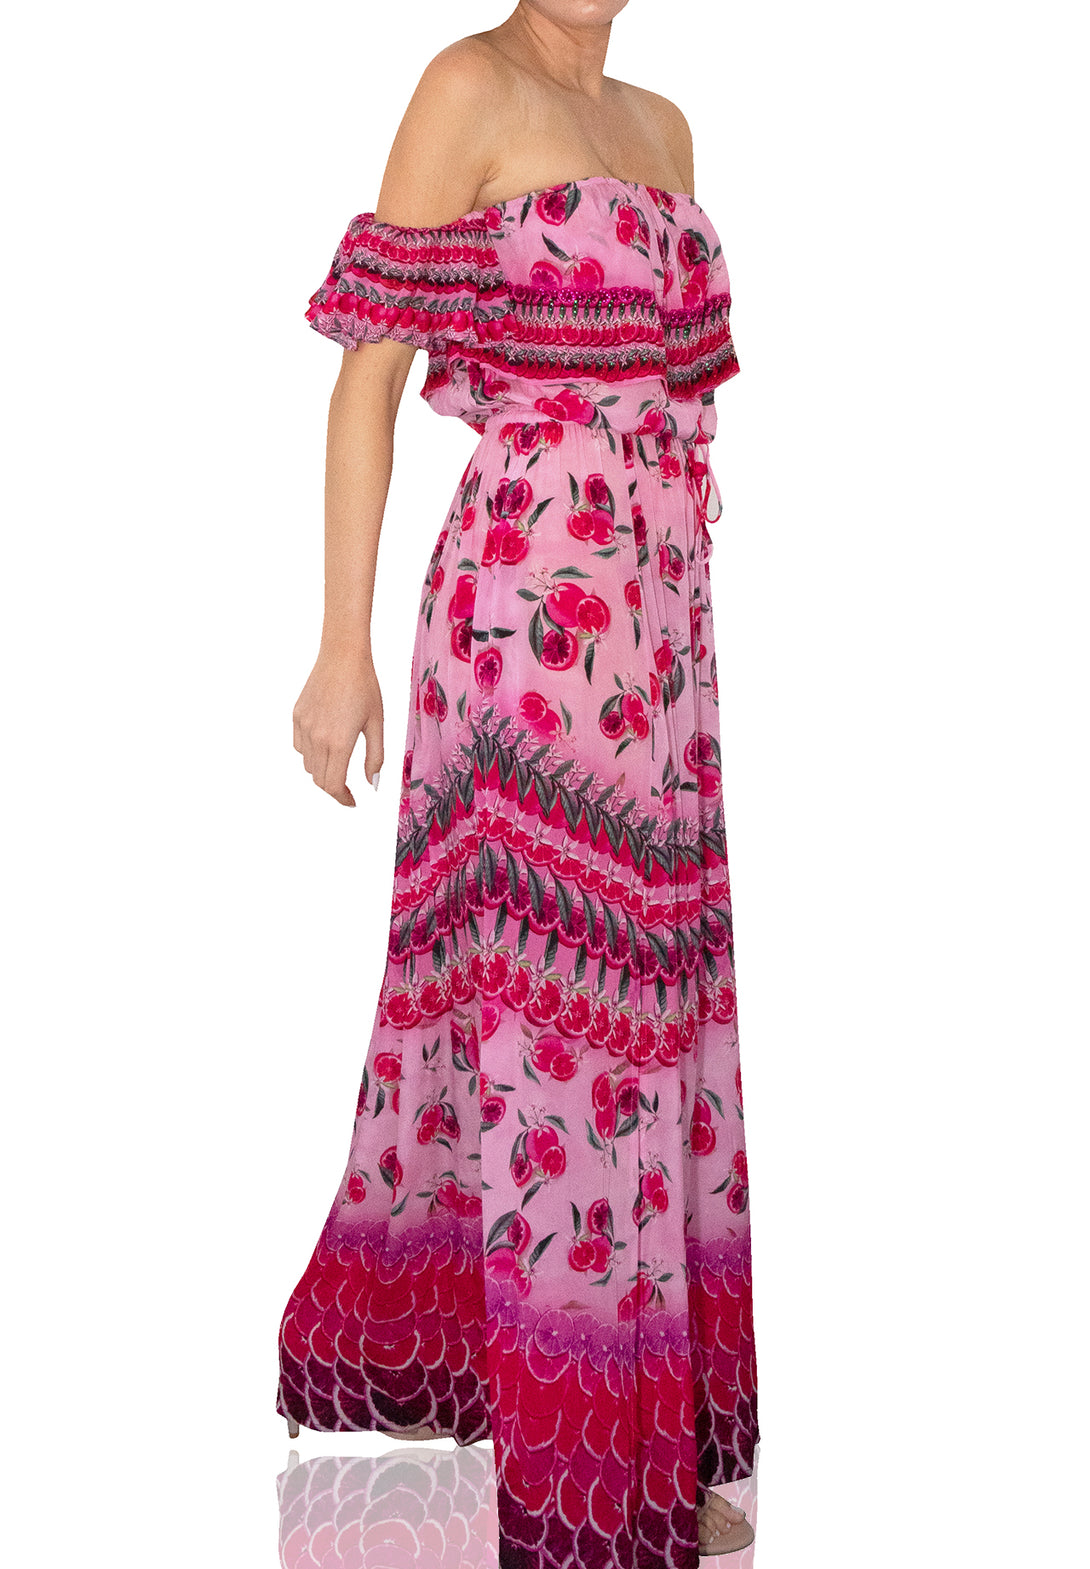  fuschia dress, off the shoulder floral dress, long flowy dresses, Shahida Parides,